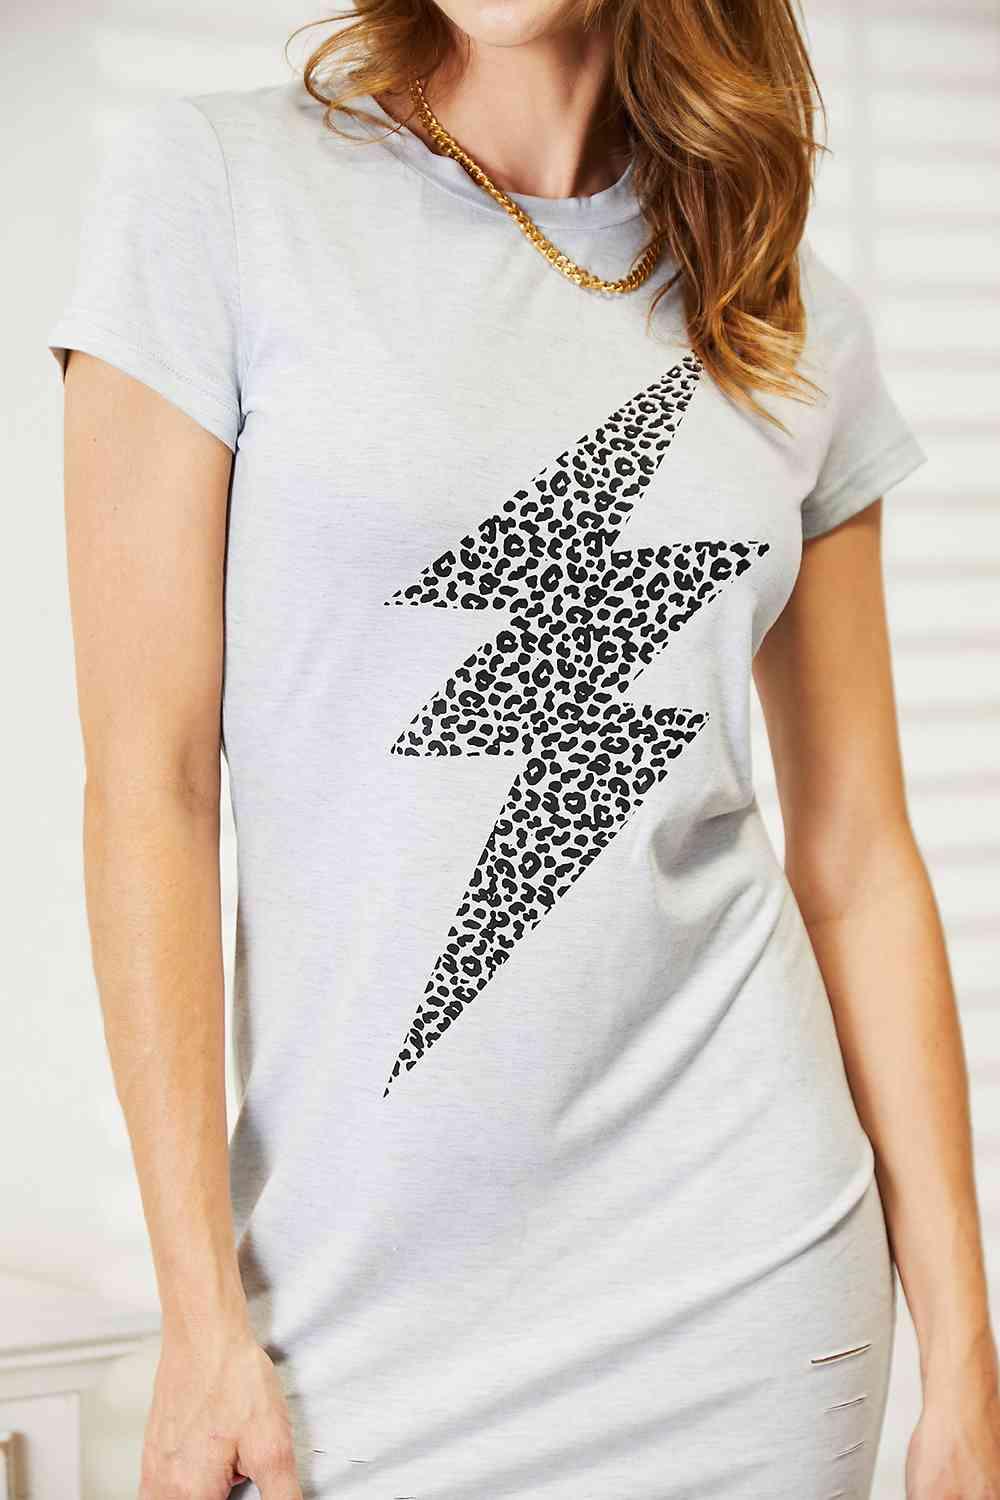 Double Take Leopard Lightning Graphic Tee Dress - AMIClubwear